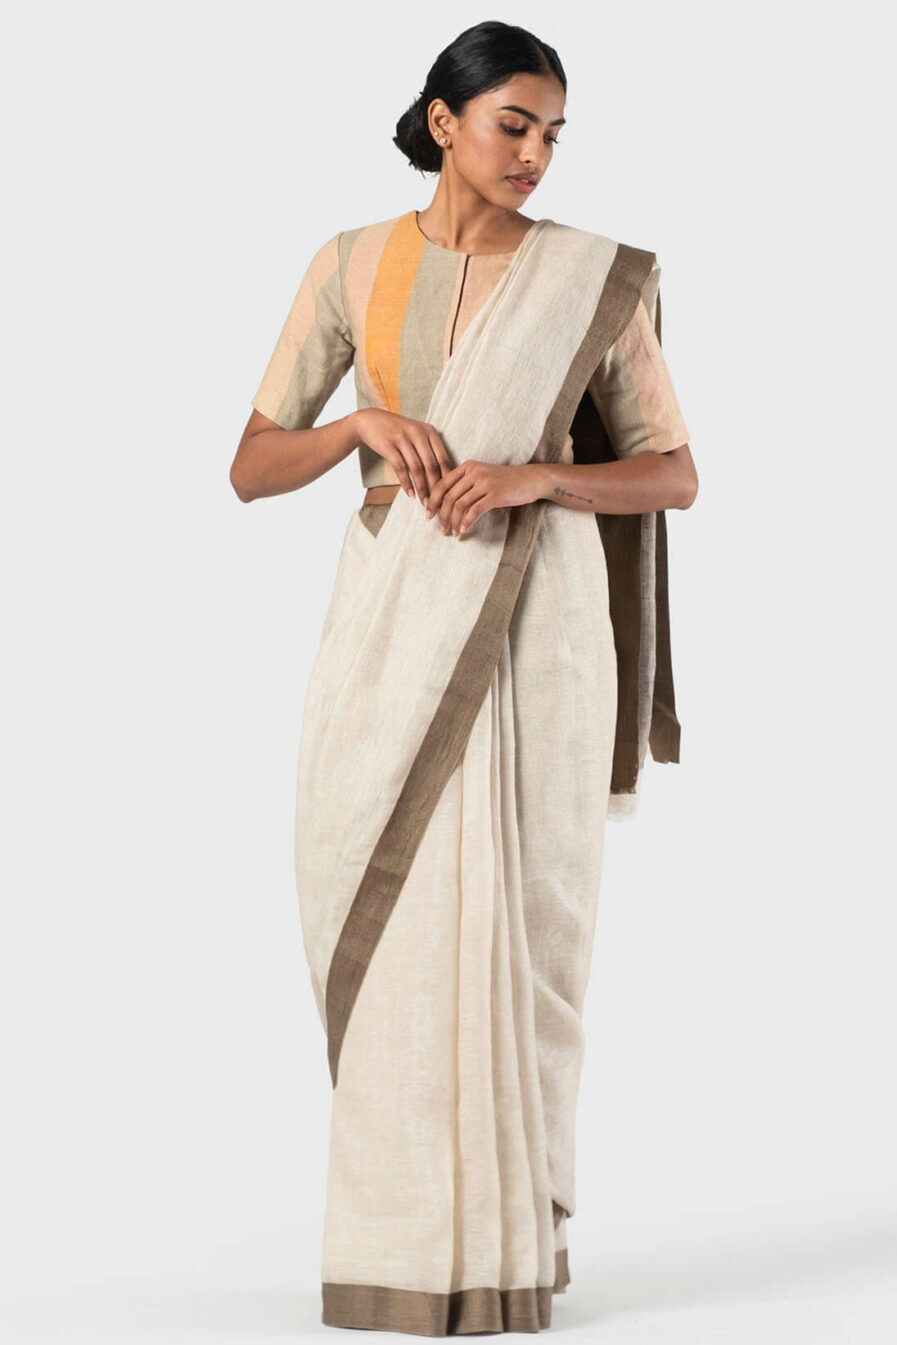 Anavila Ivory Twill border summer linen sari